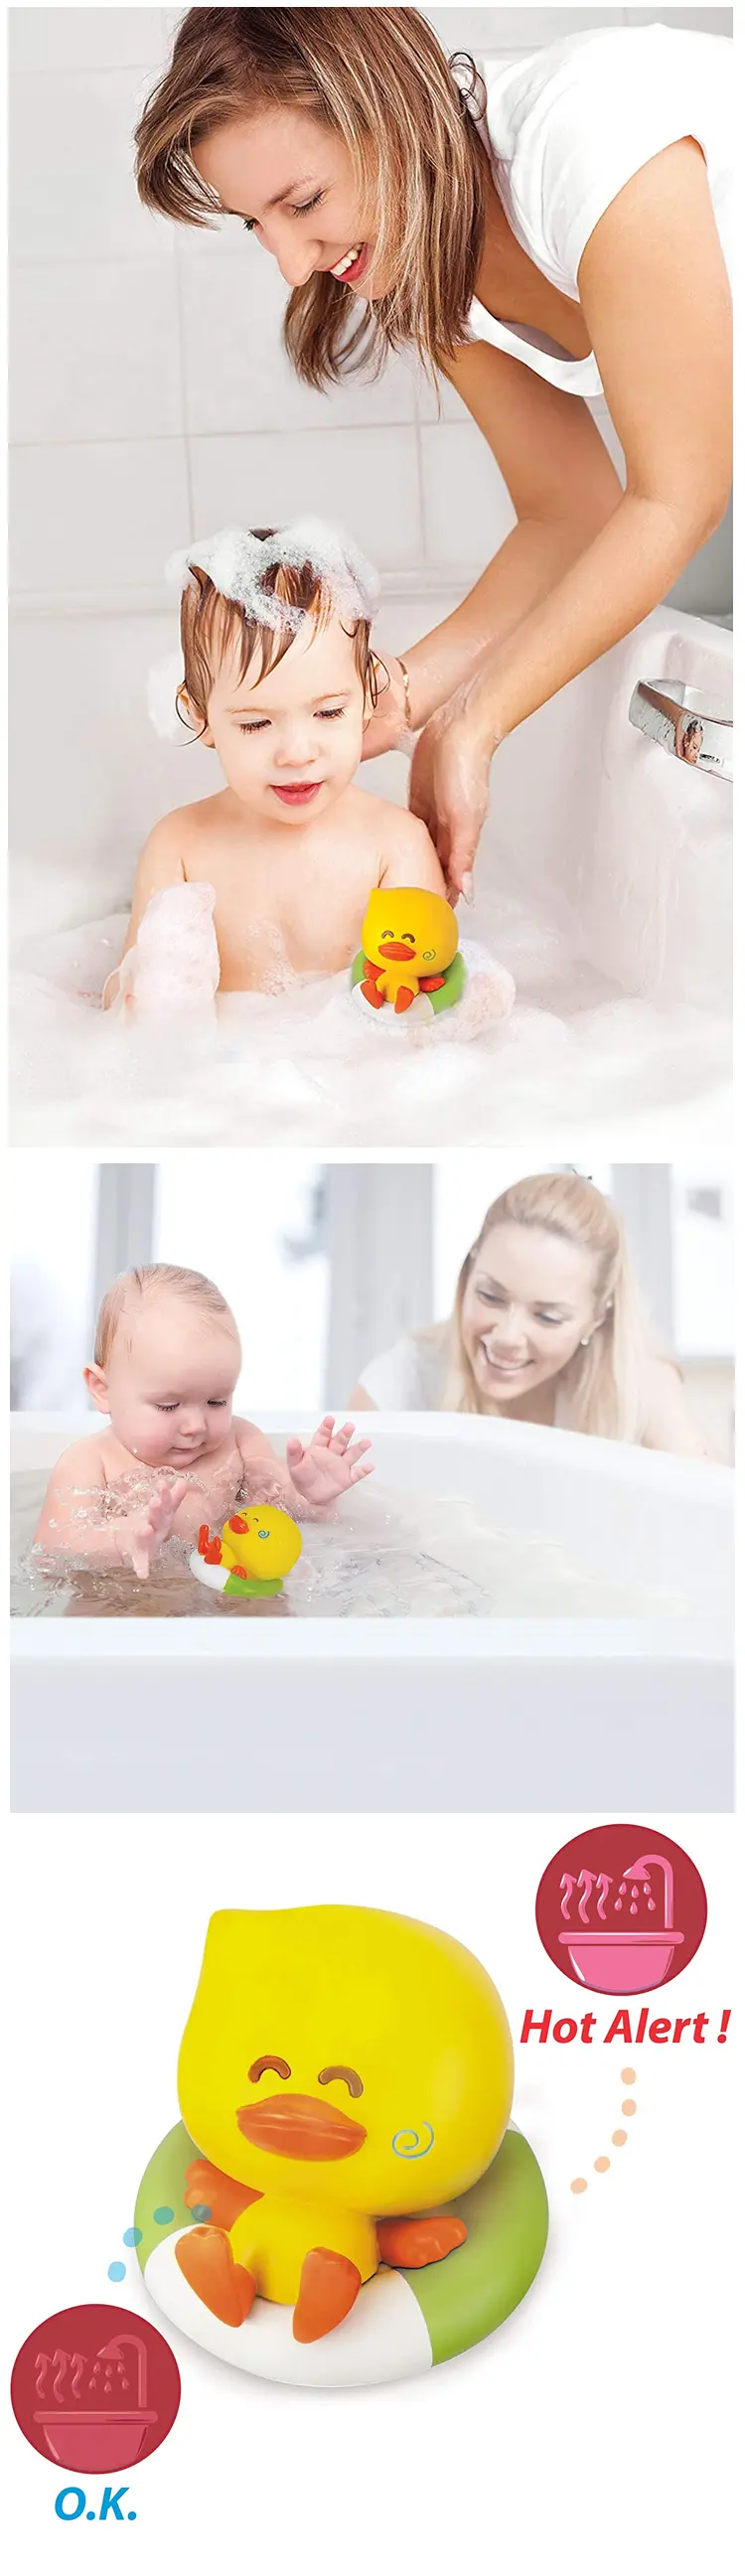 infantino 感溫小鴨洗澡玩具(水溫提示)